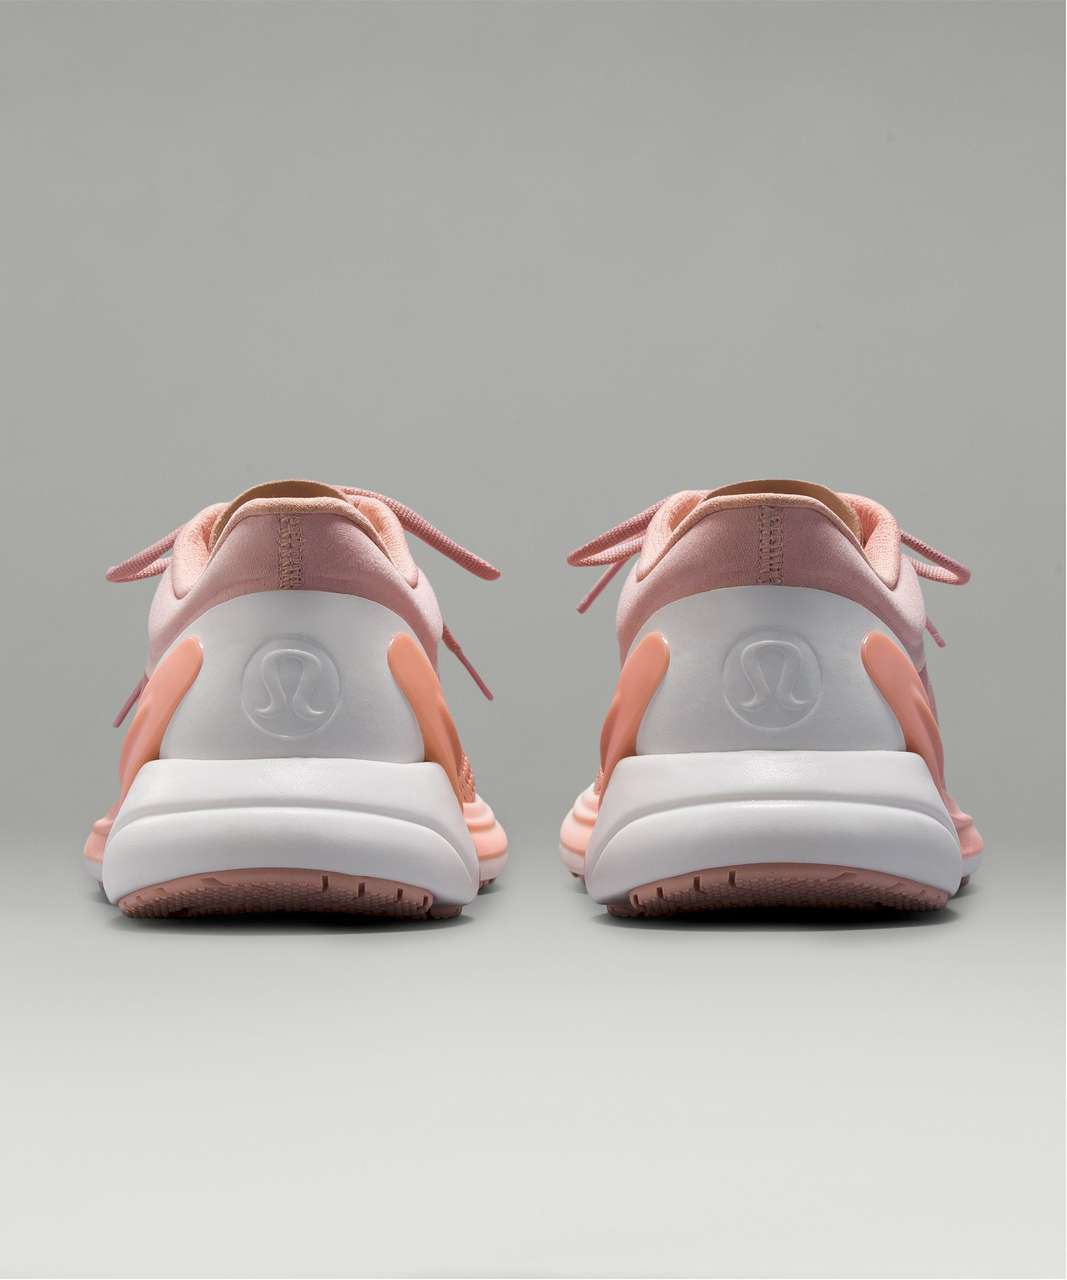 Lululemon Blissfeel Run Running Shoes - Women's Size 6.5 - Pink Green